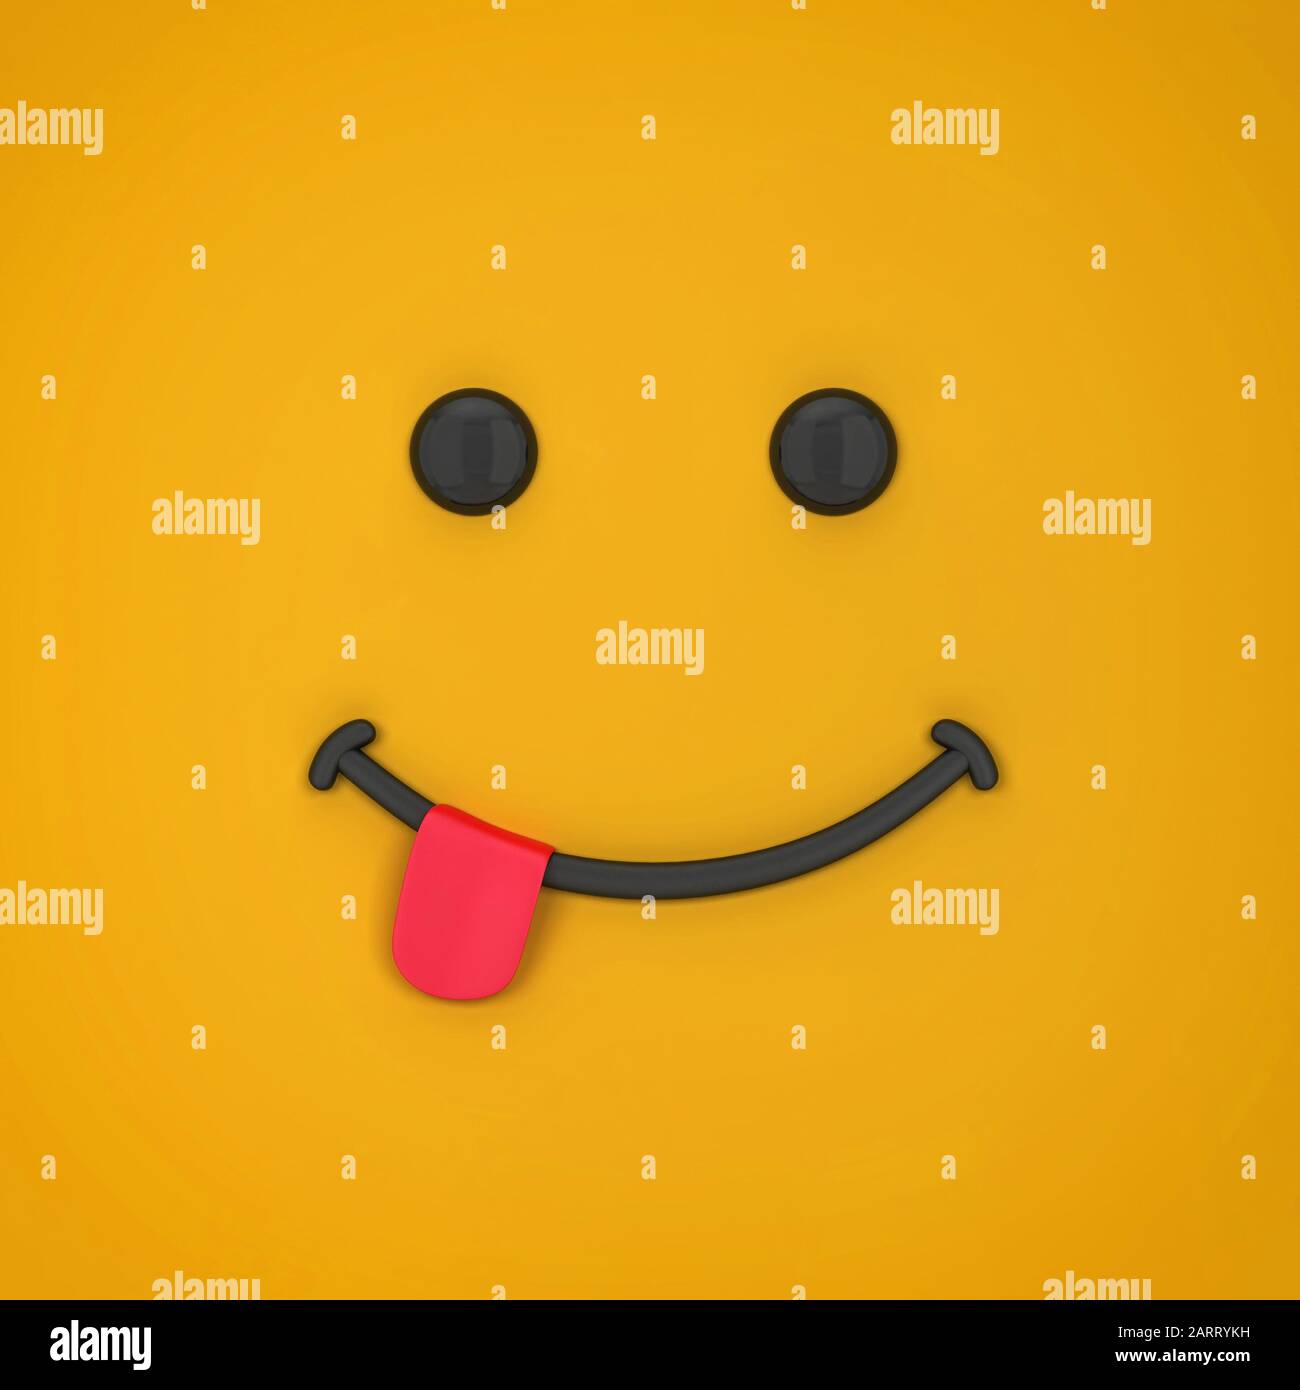 Smiley face emoji. 3d illustration Stock Photo